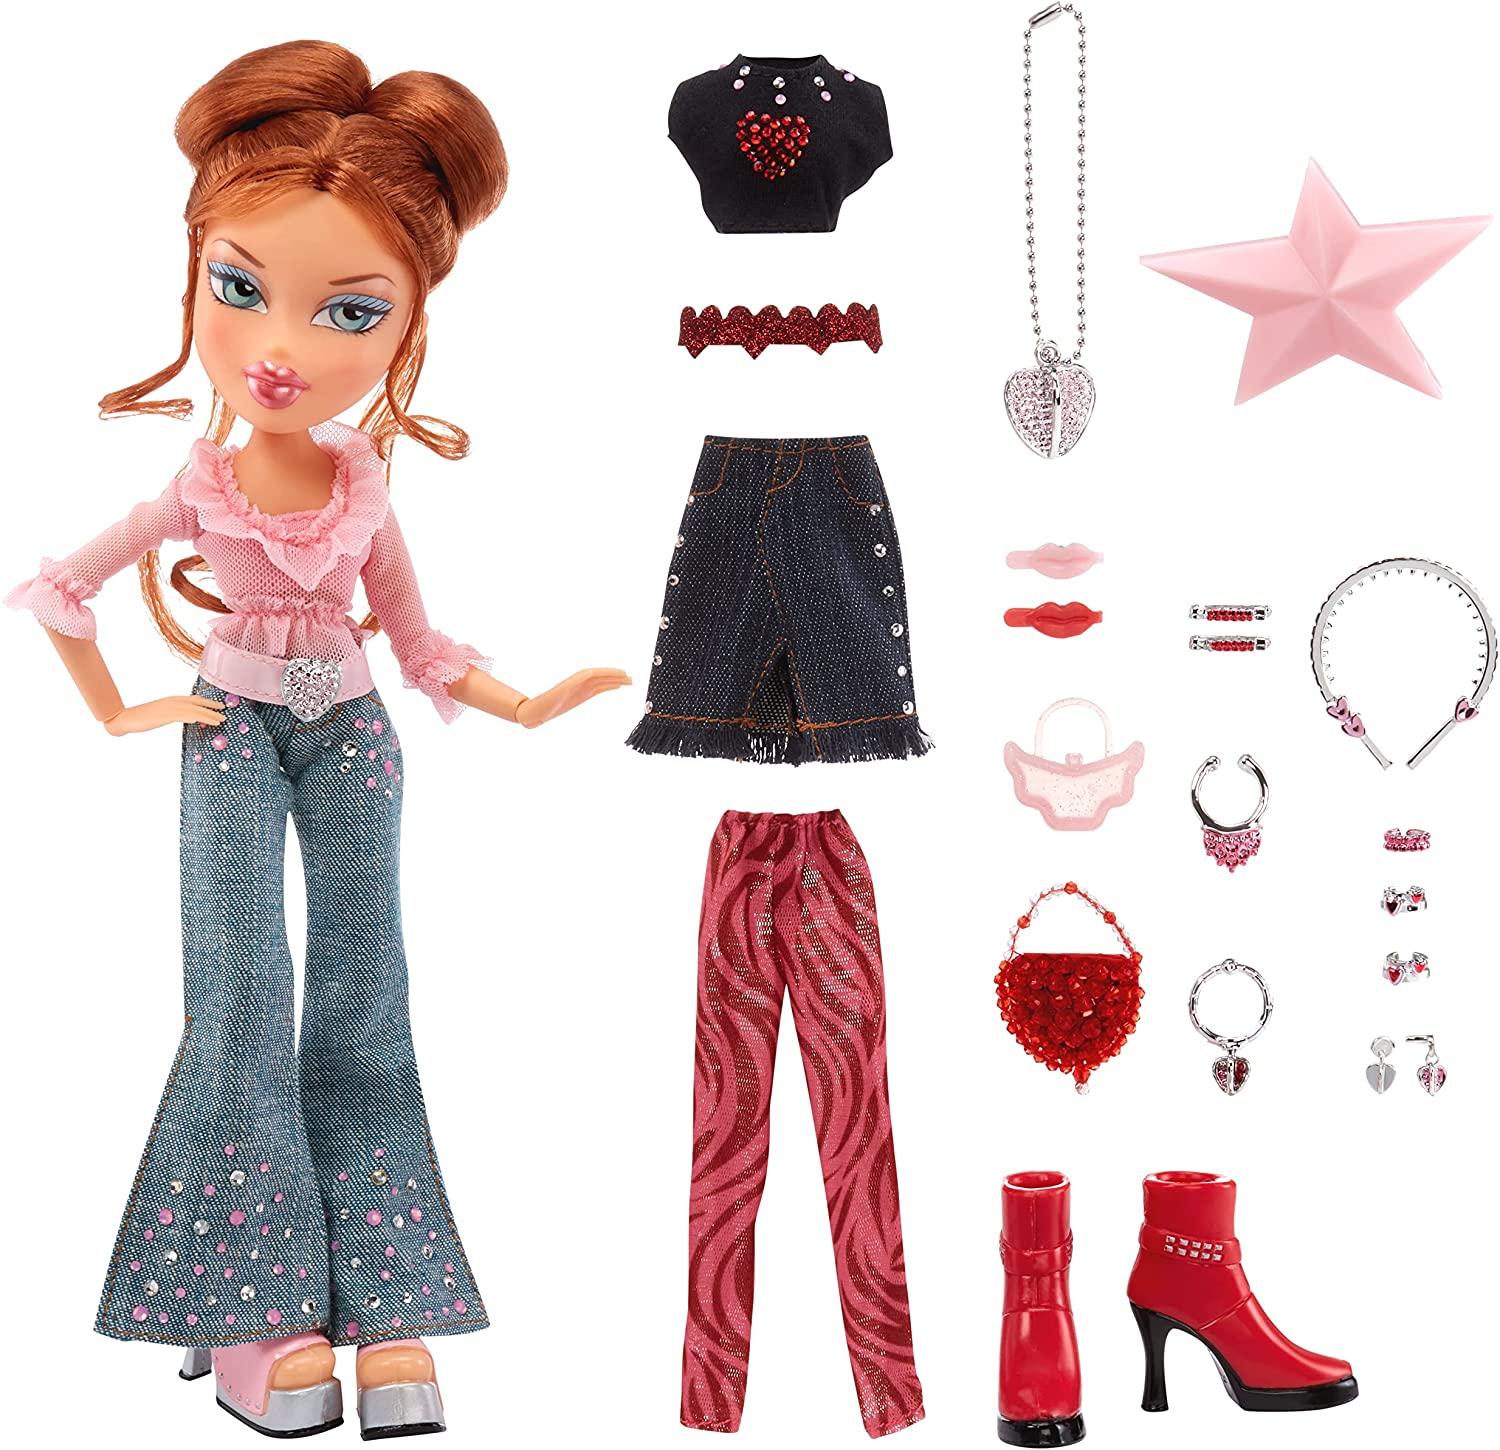 Bratz Collector’s Edition Sweet Heart Meygan Fashion Doll